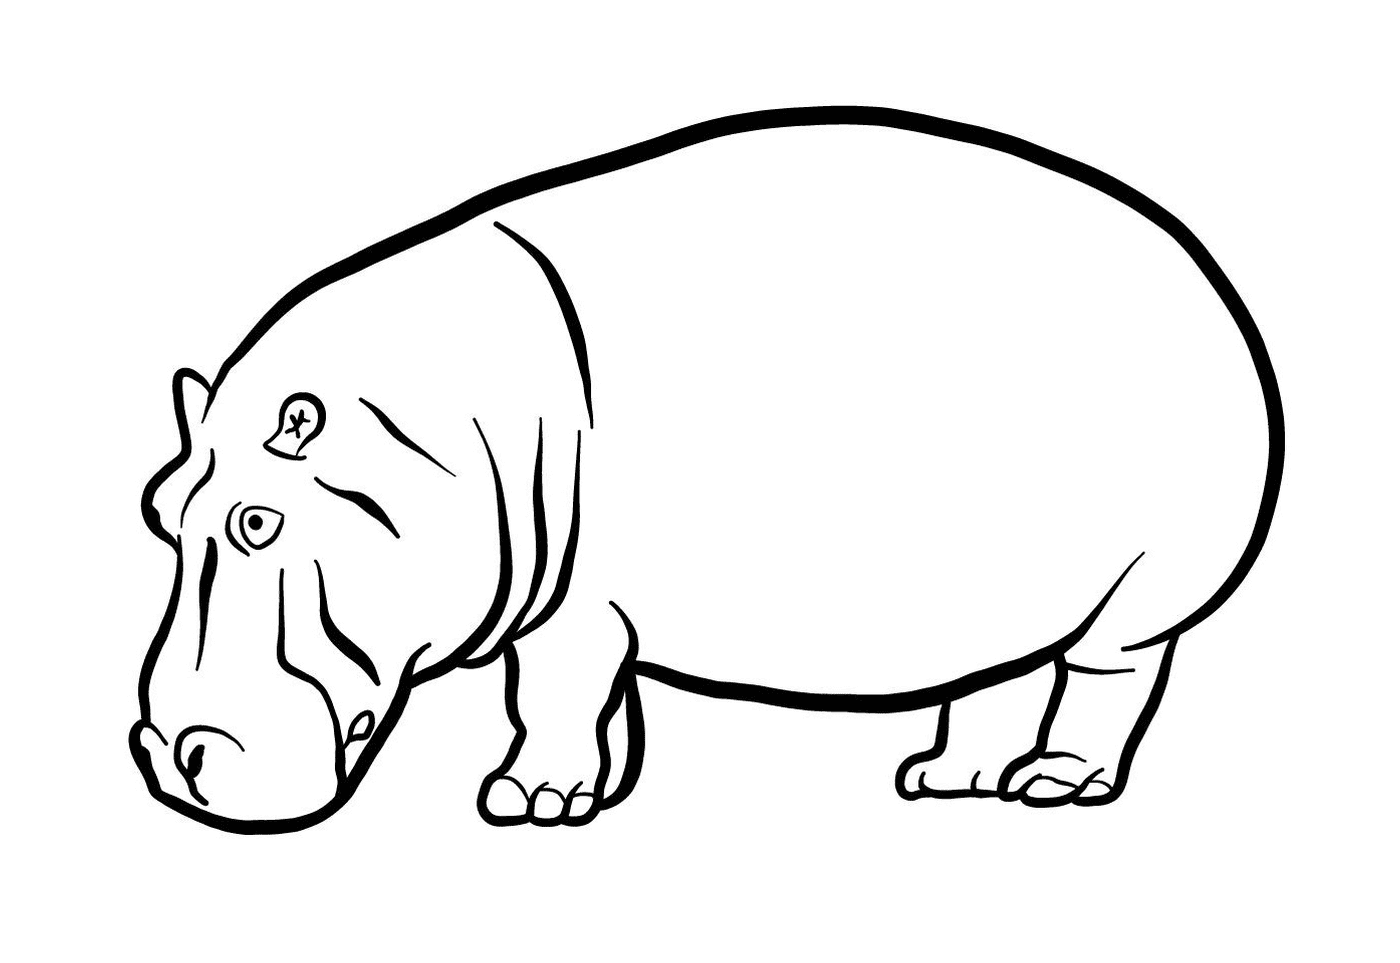  A hippopotamus 